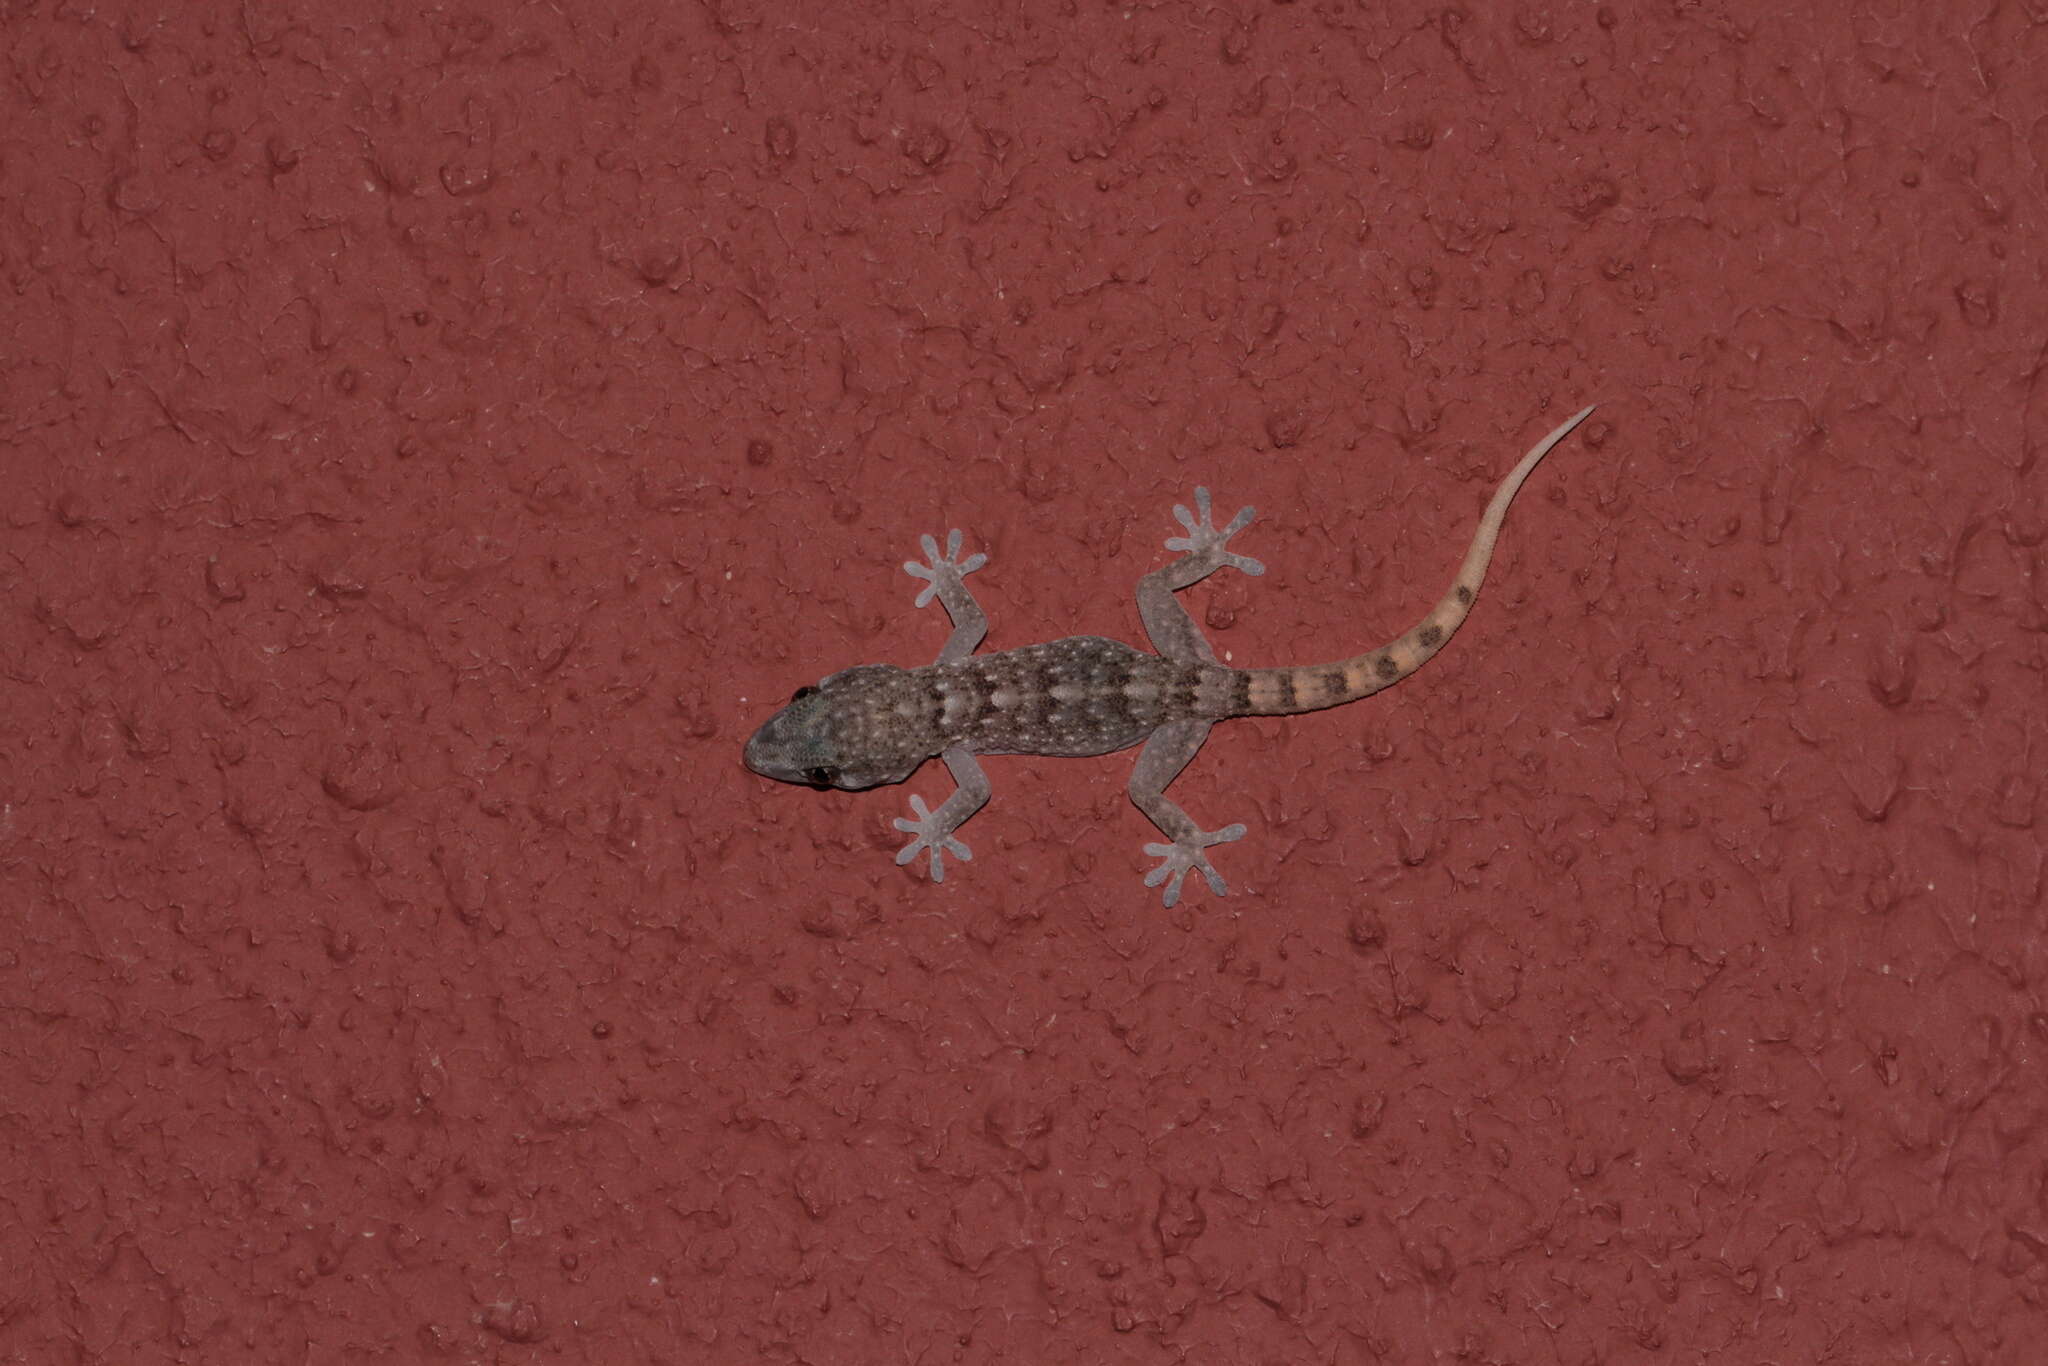 Image of Boettger's Wall Gecko